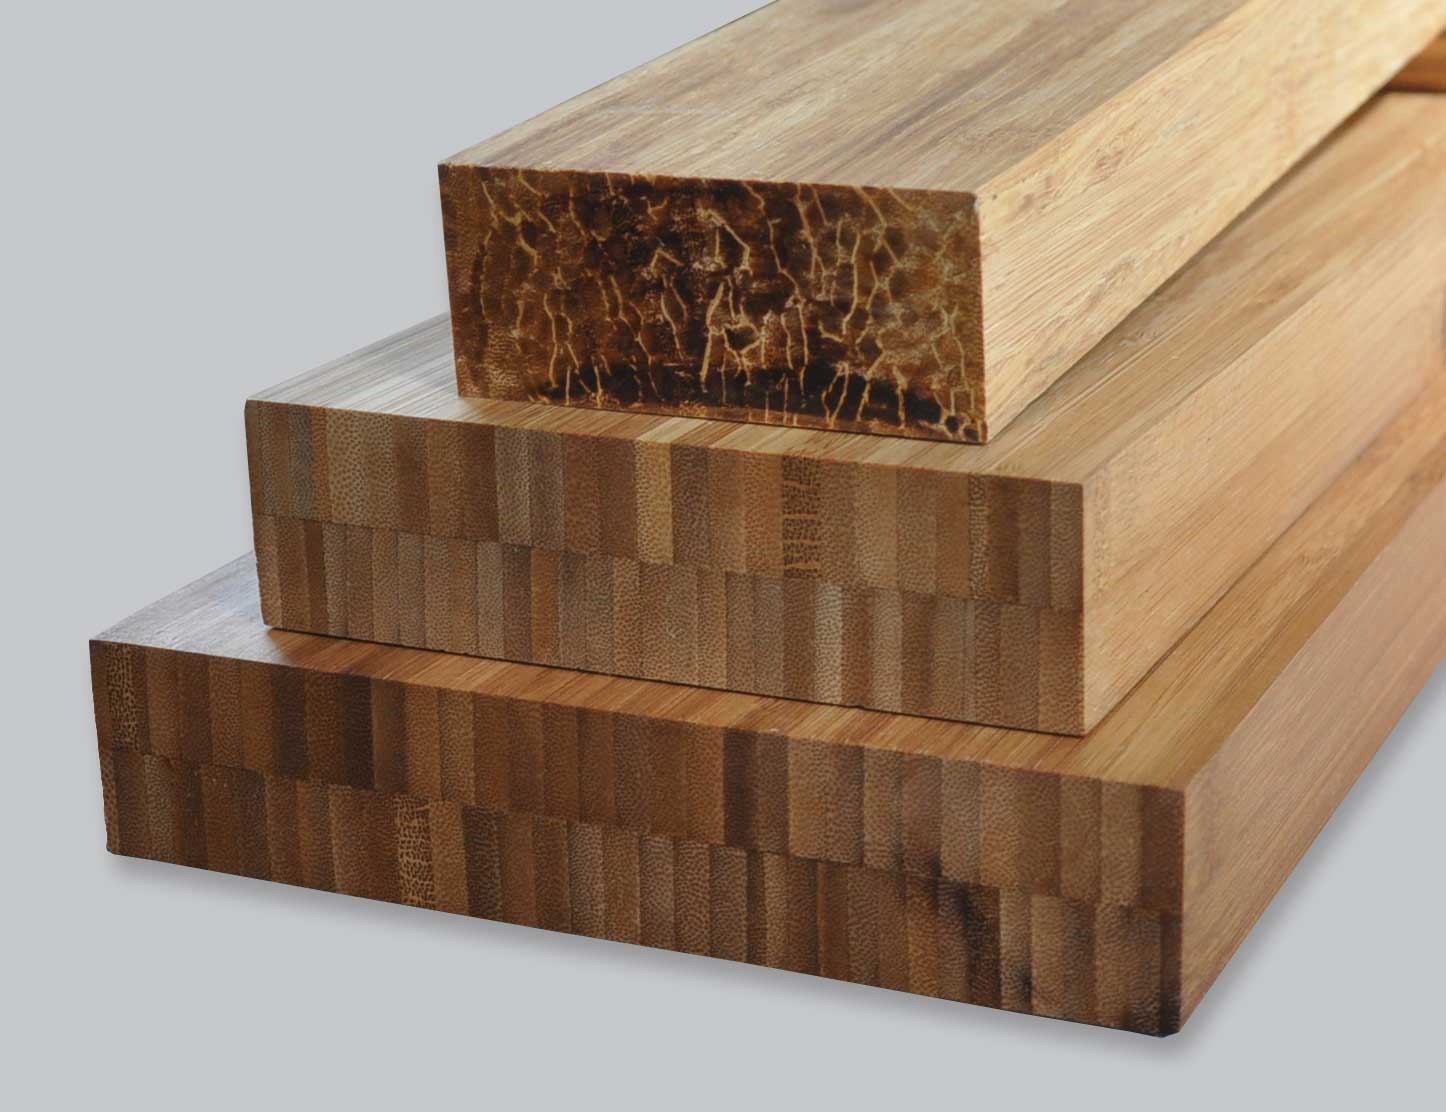 Dimensional Lumber Sizes